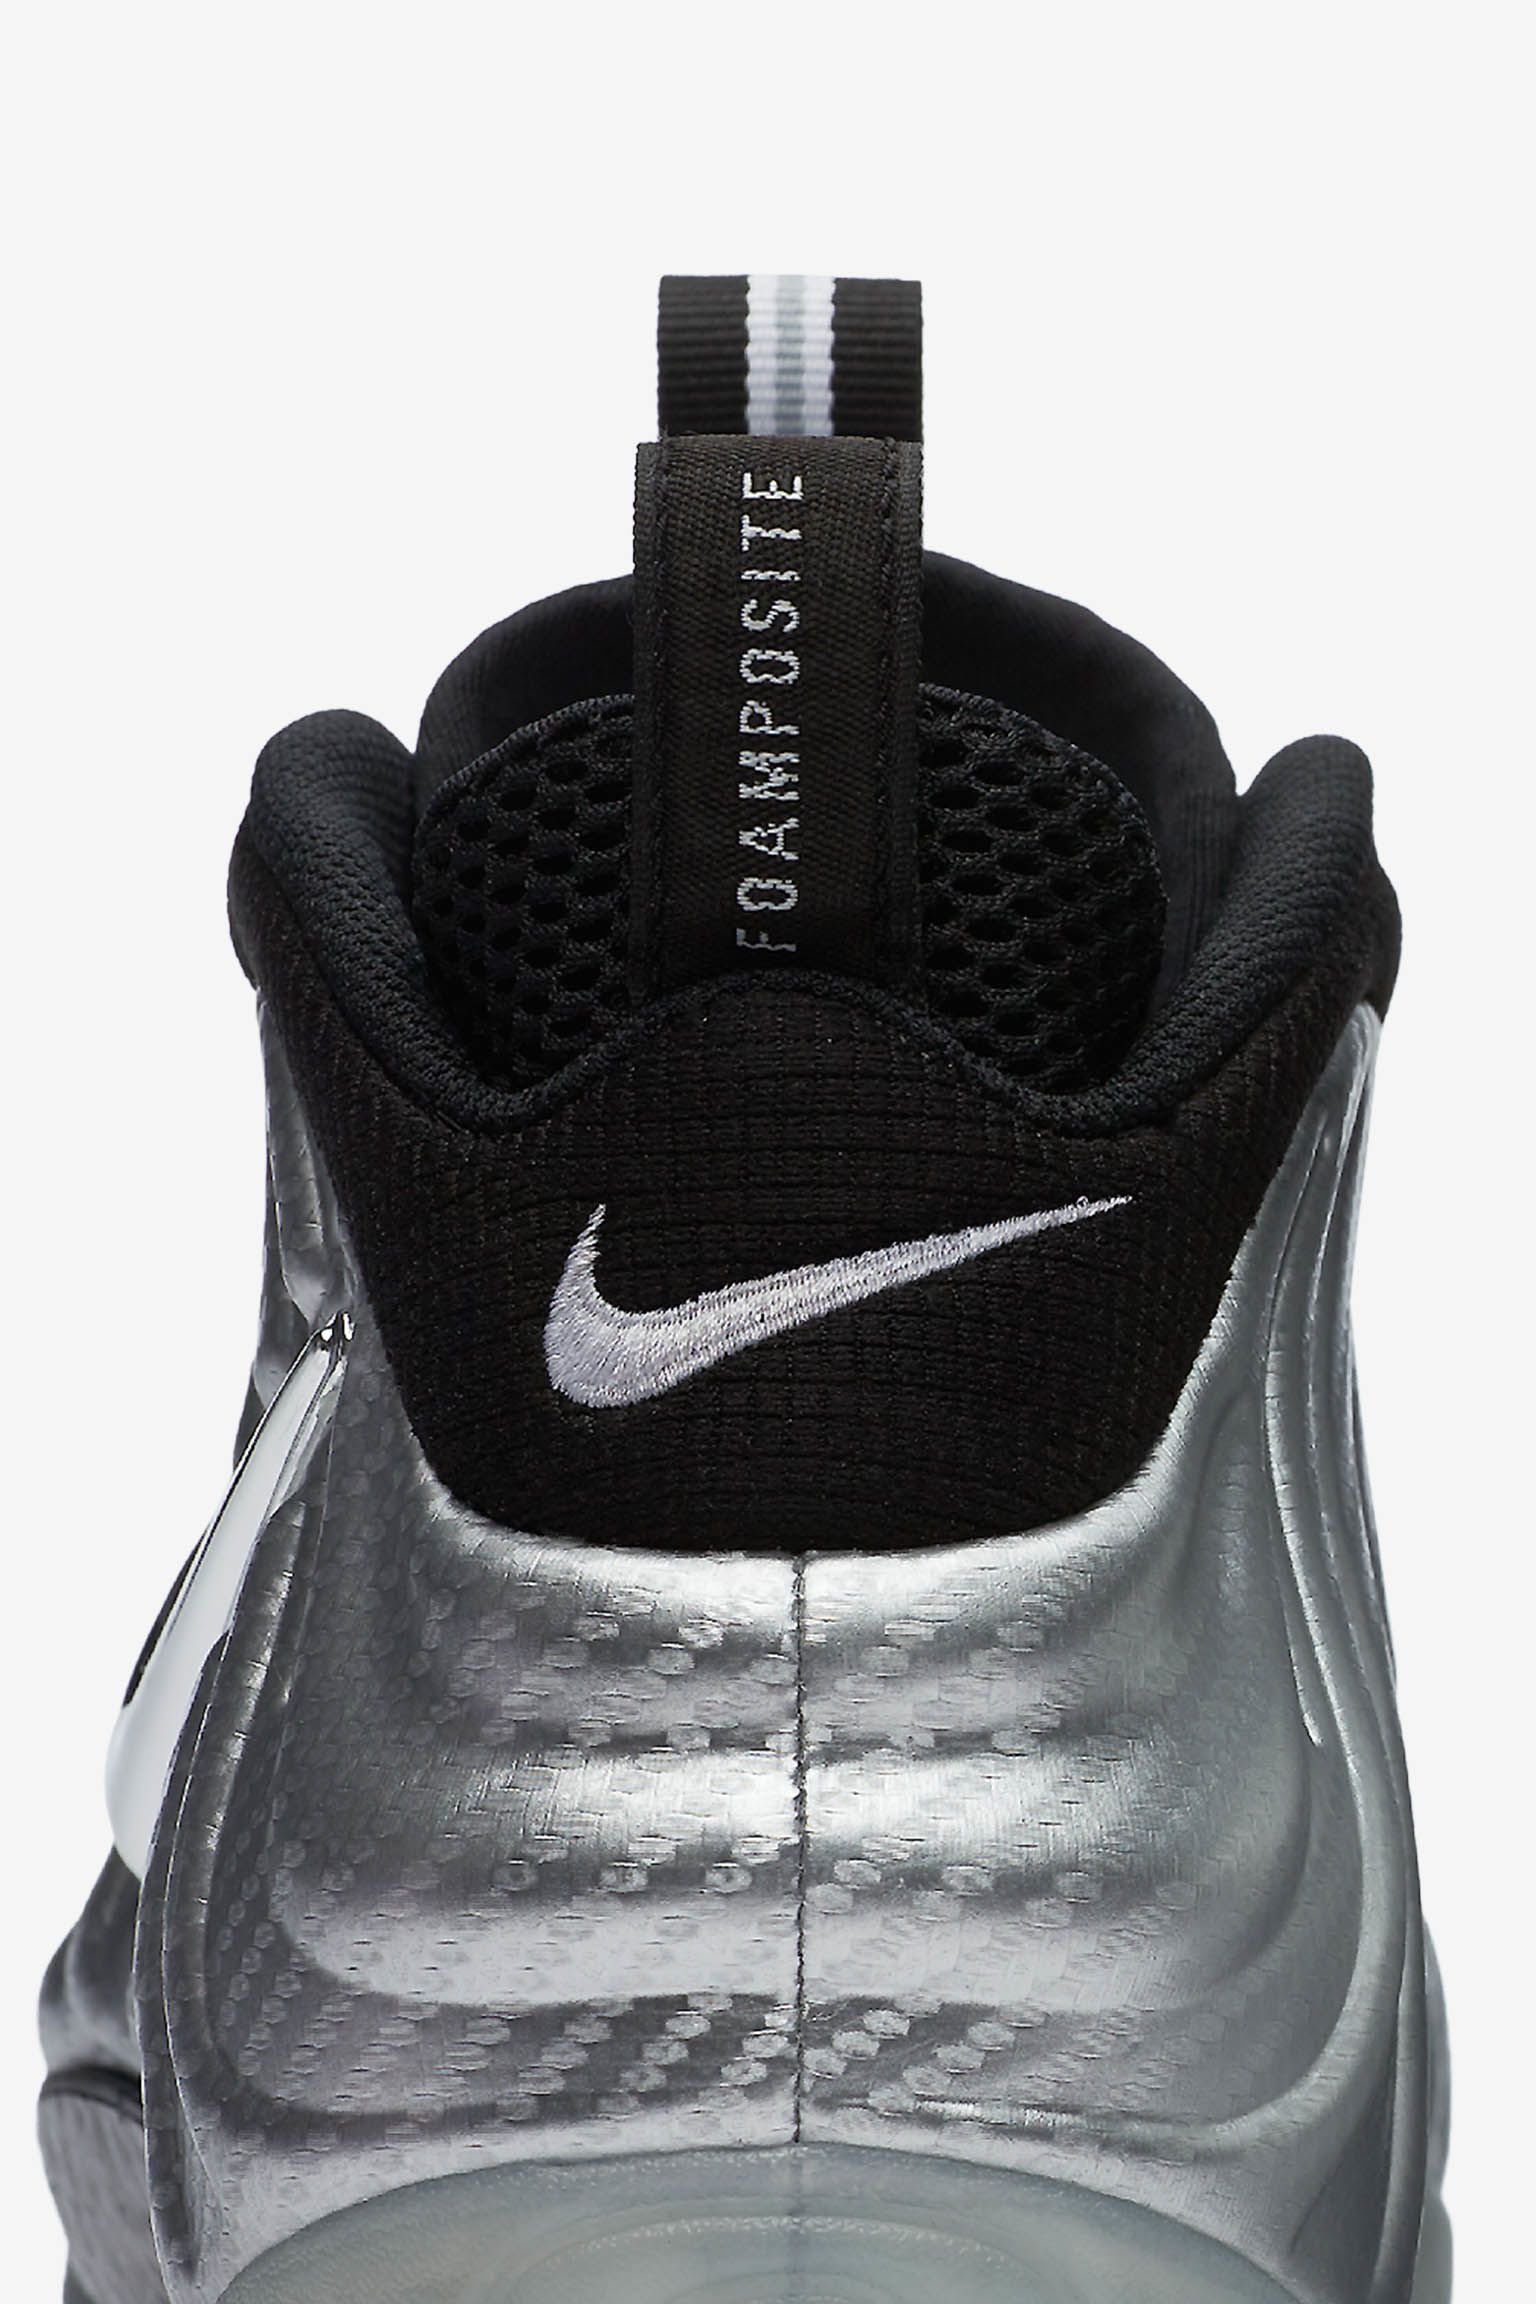 Nike Air Foamposite Pro 'Metallic Silver'. Nike SNKRS